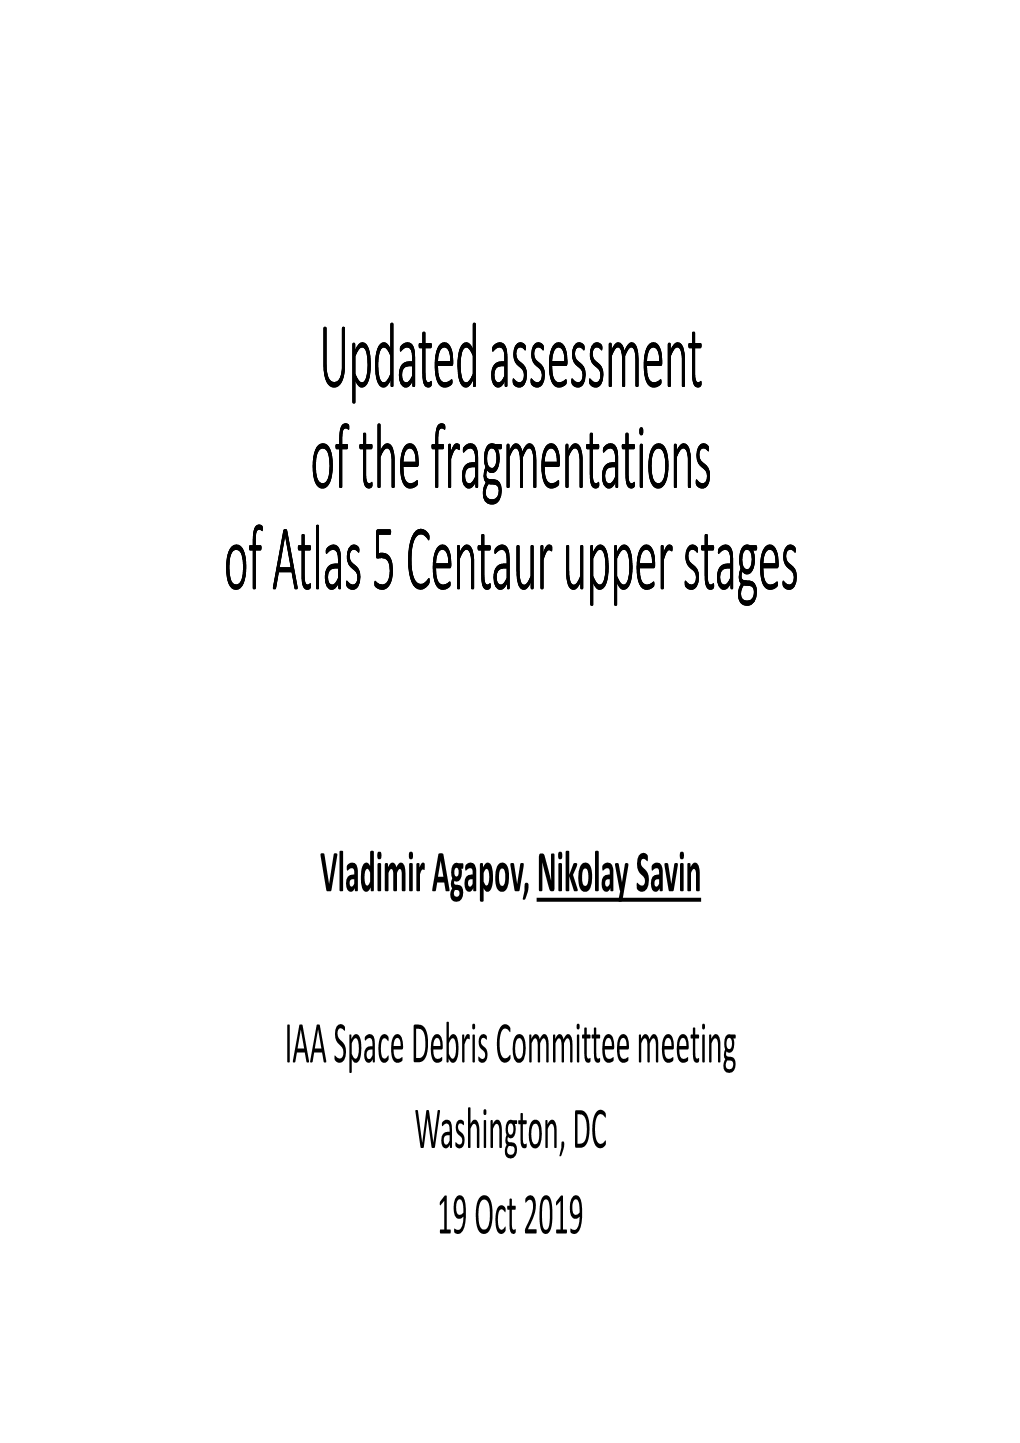 14. Updates on Centaur Fragmentations Savin